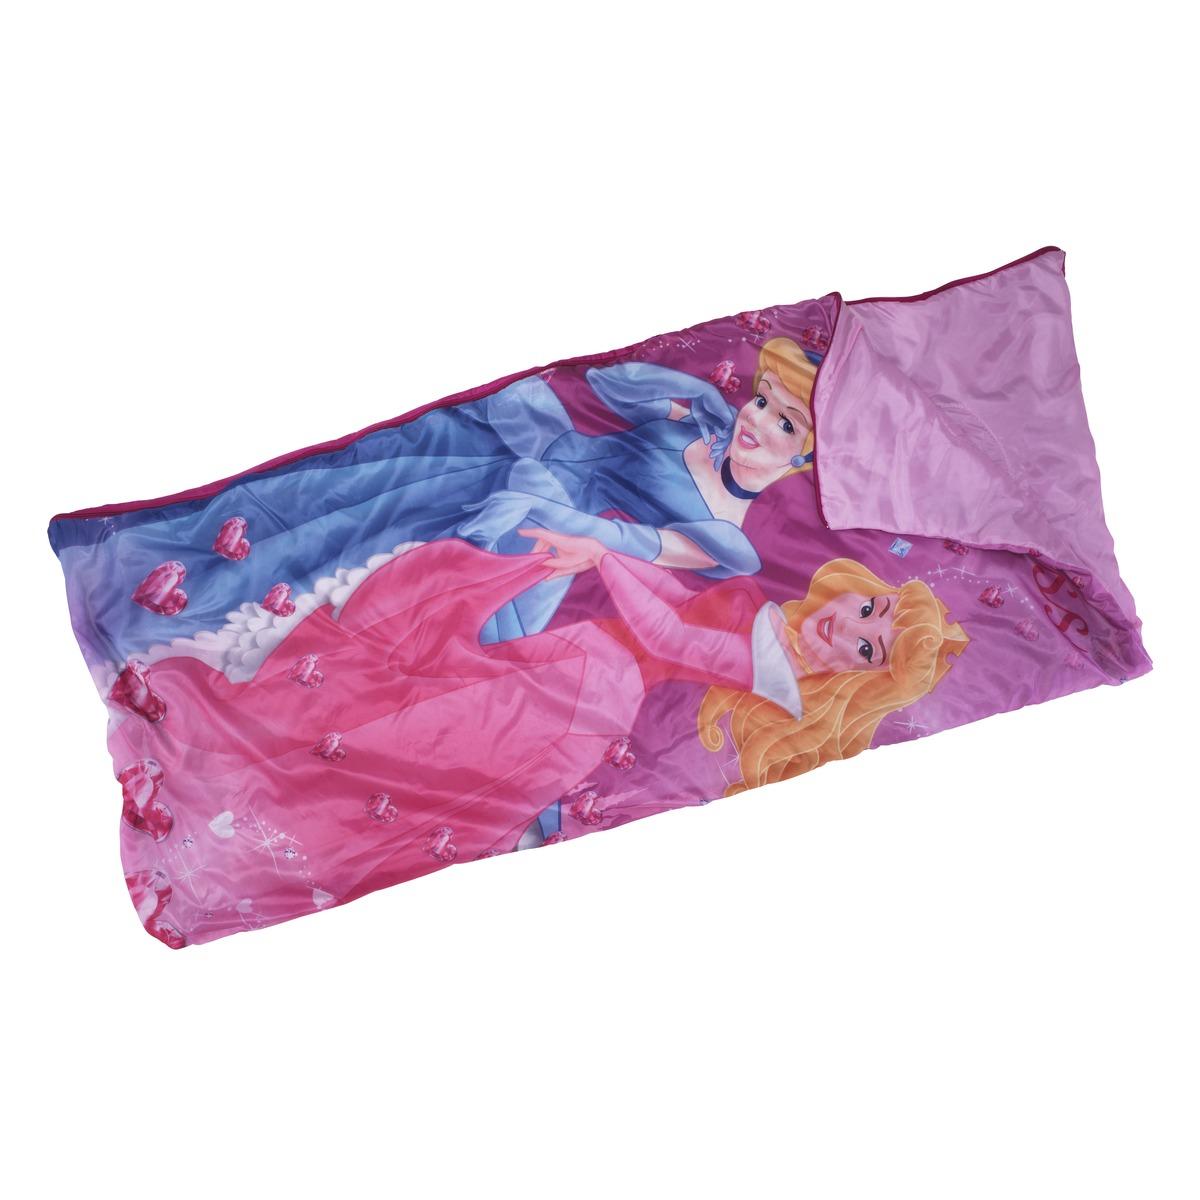 Sac de couchage Princesses - 150 x 65 cm - Multicolore